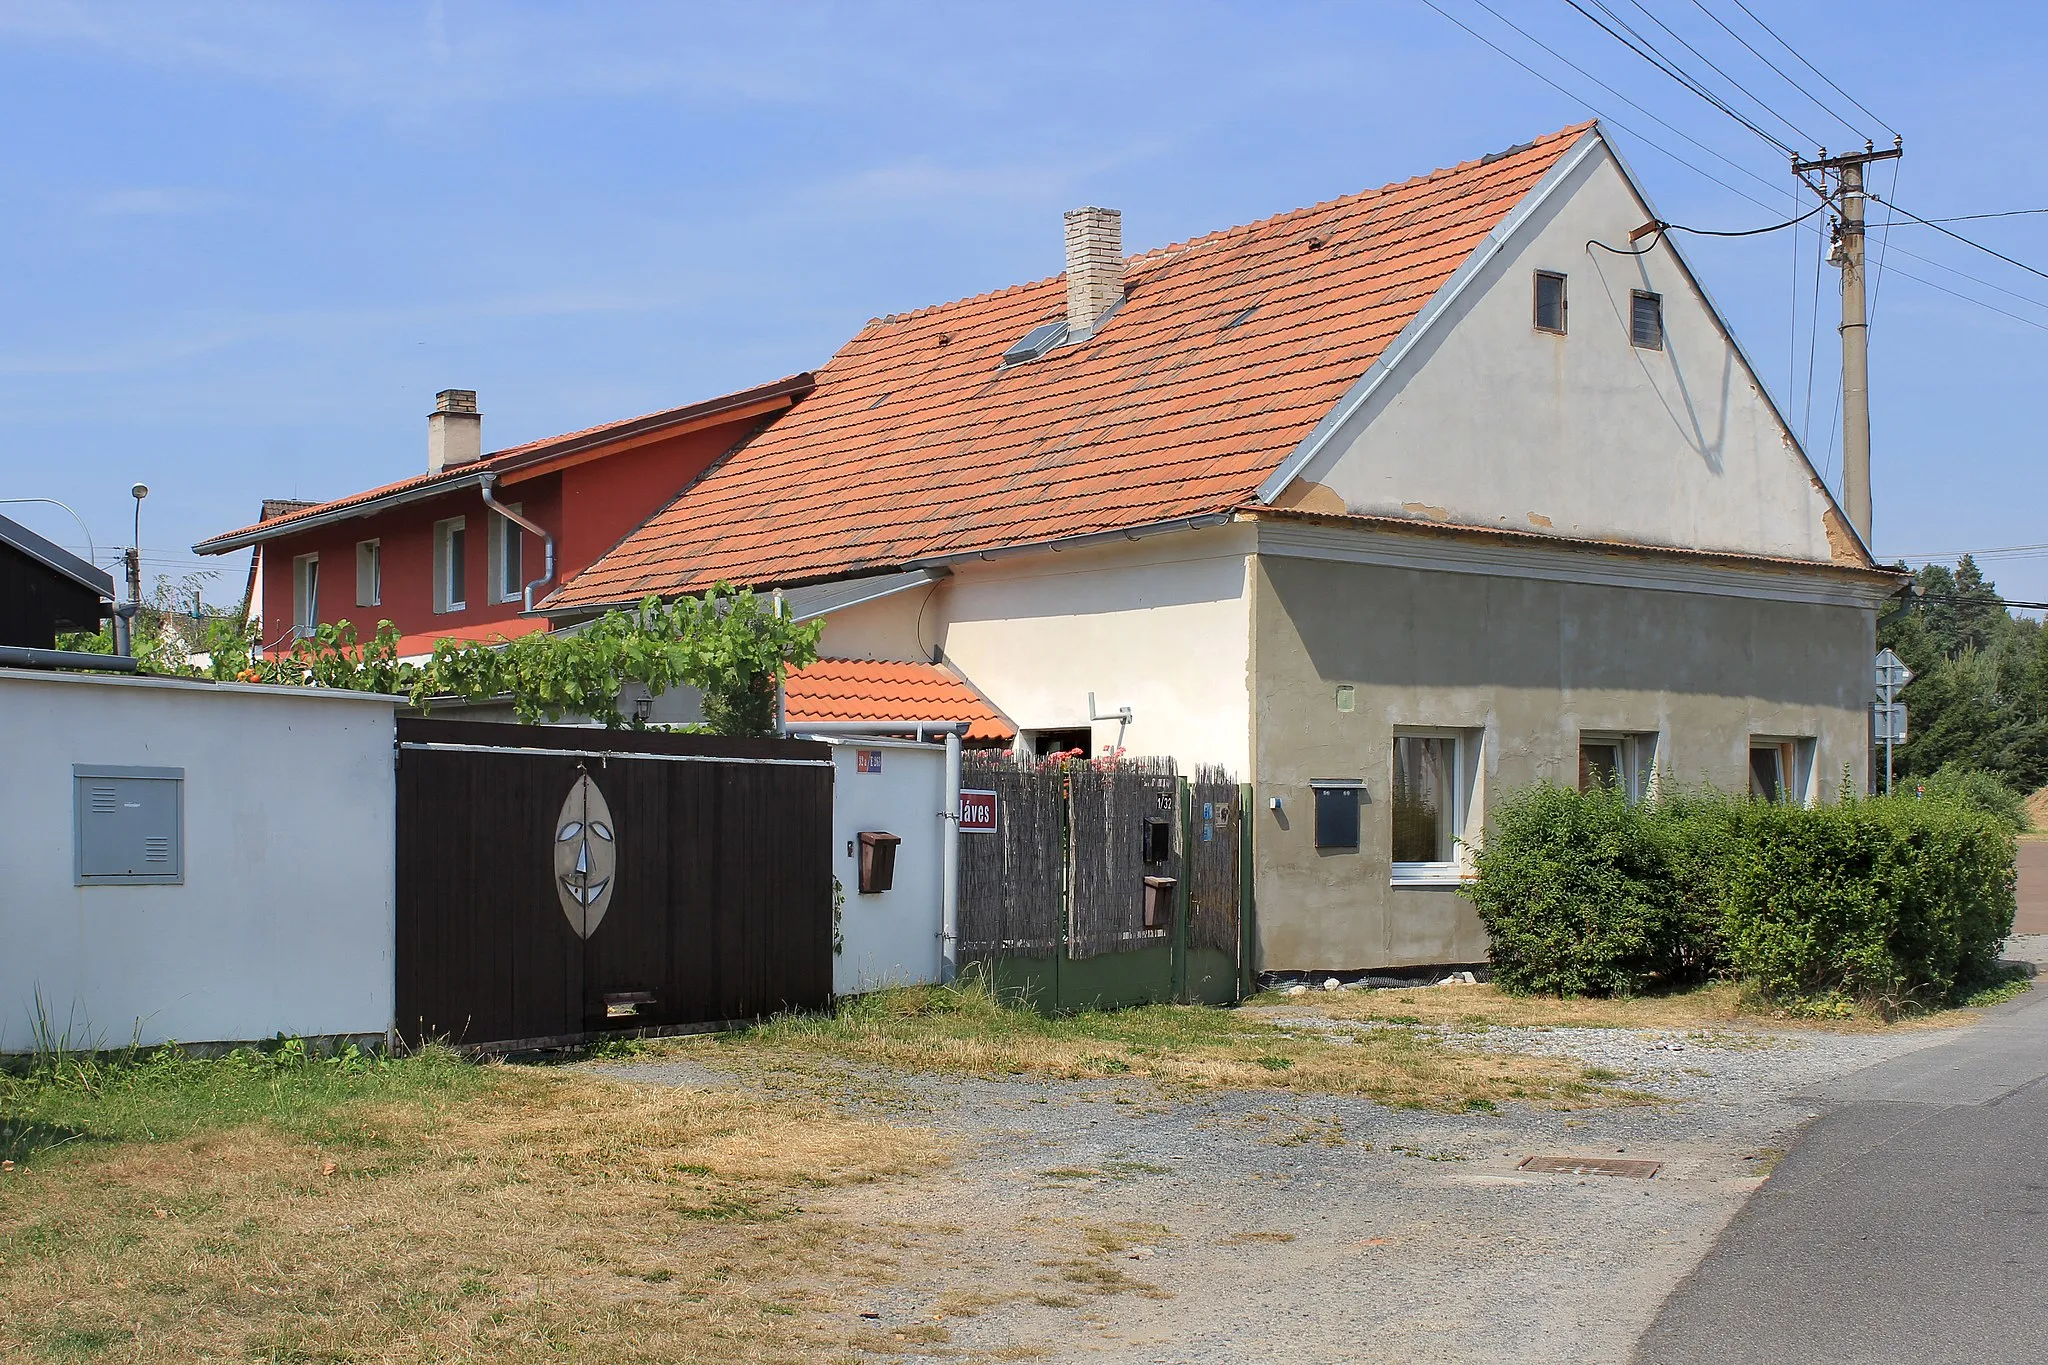 Photo showing: House No 32 in Lhota, part of Plzeň, Czech Republic.